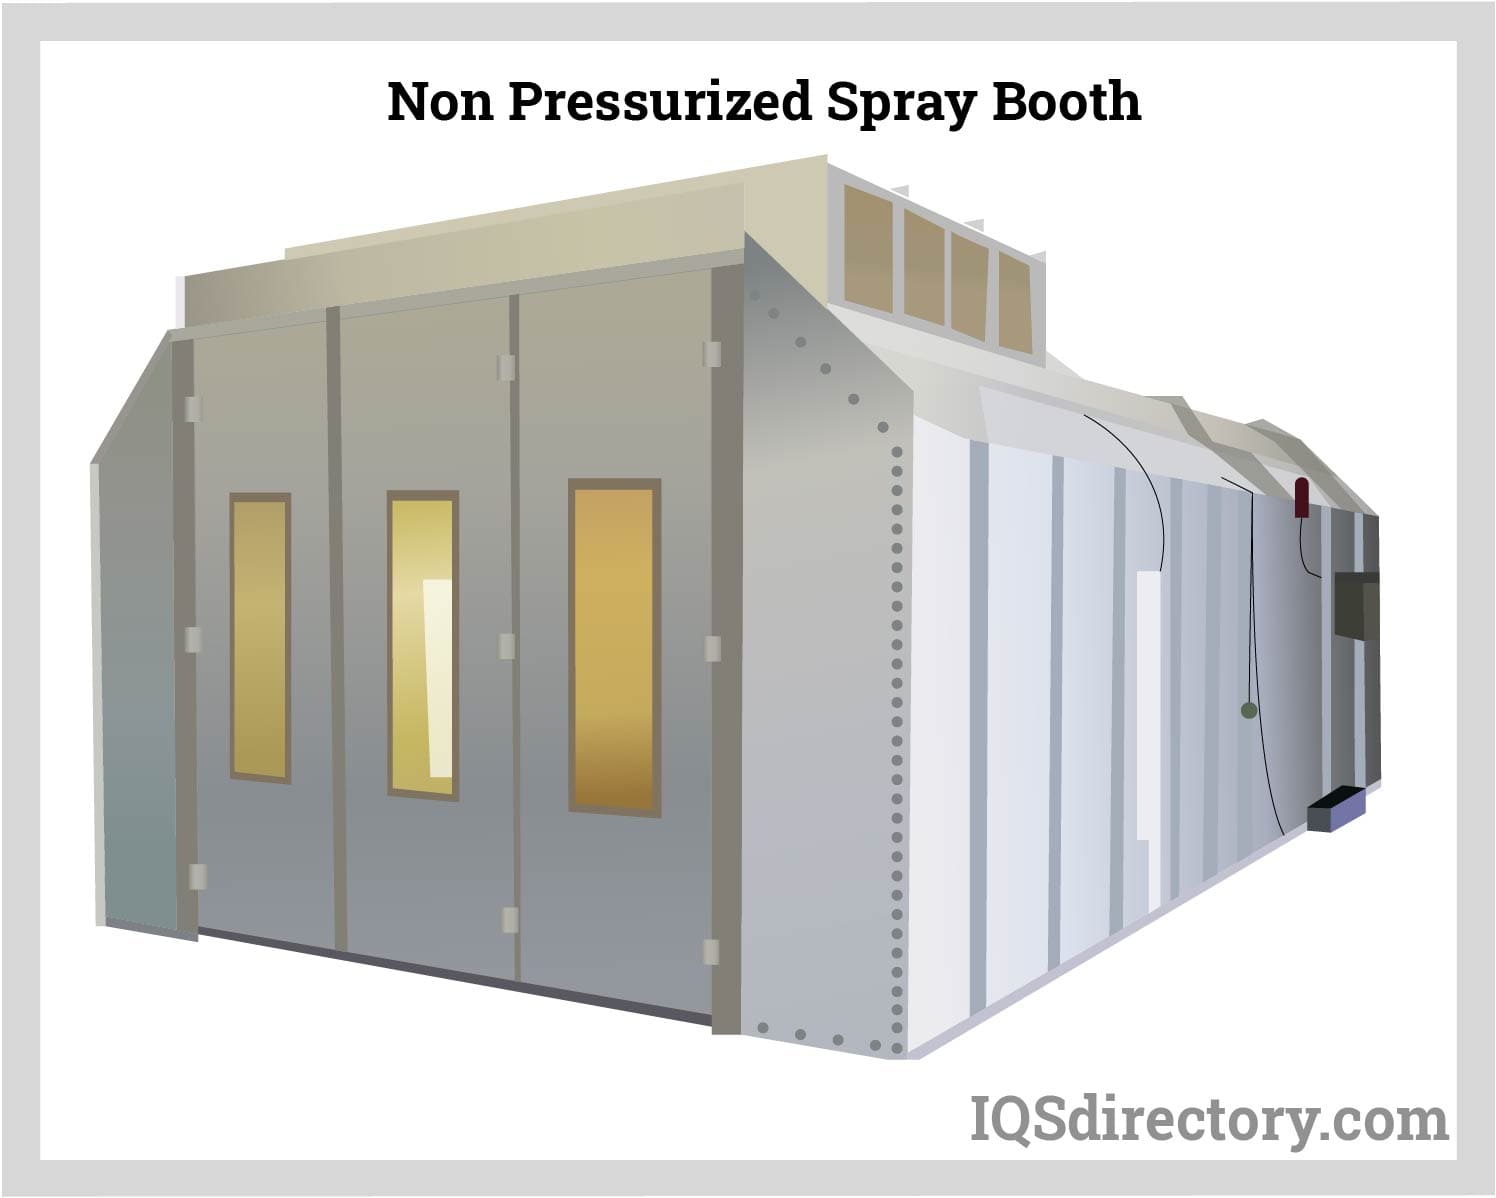 Non Pressurized Spray Booth